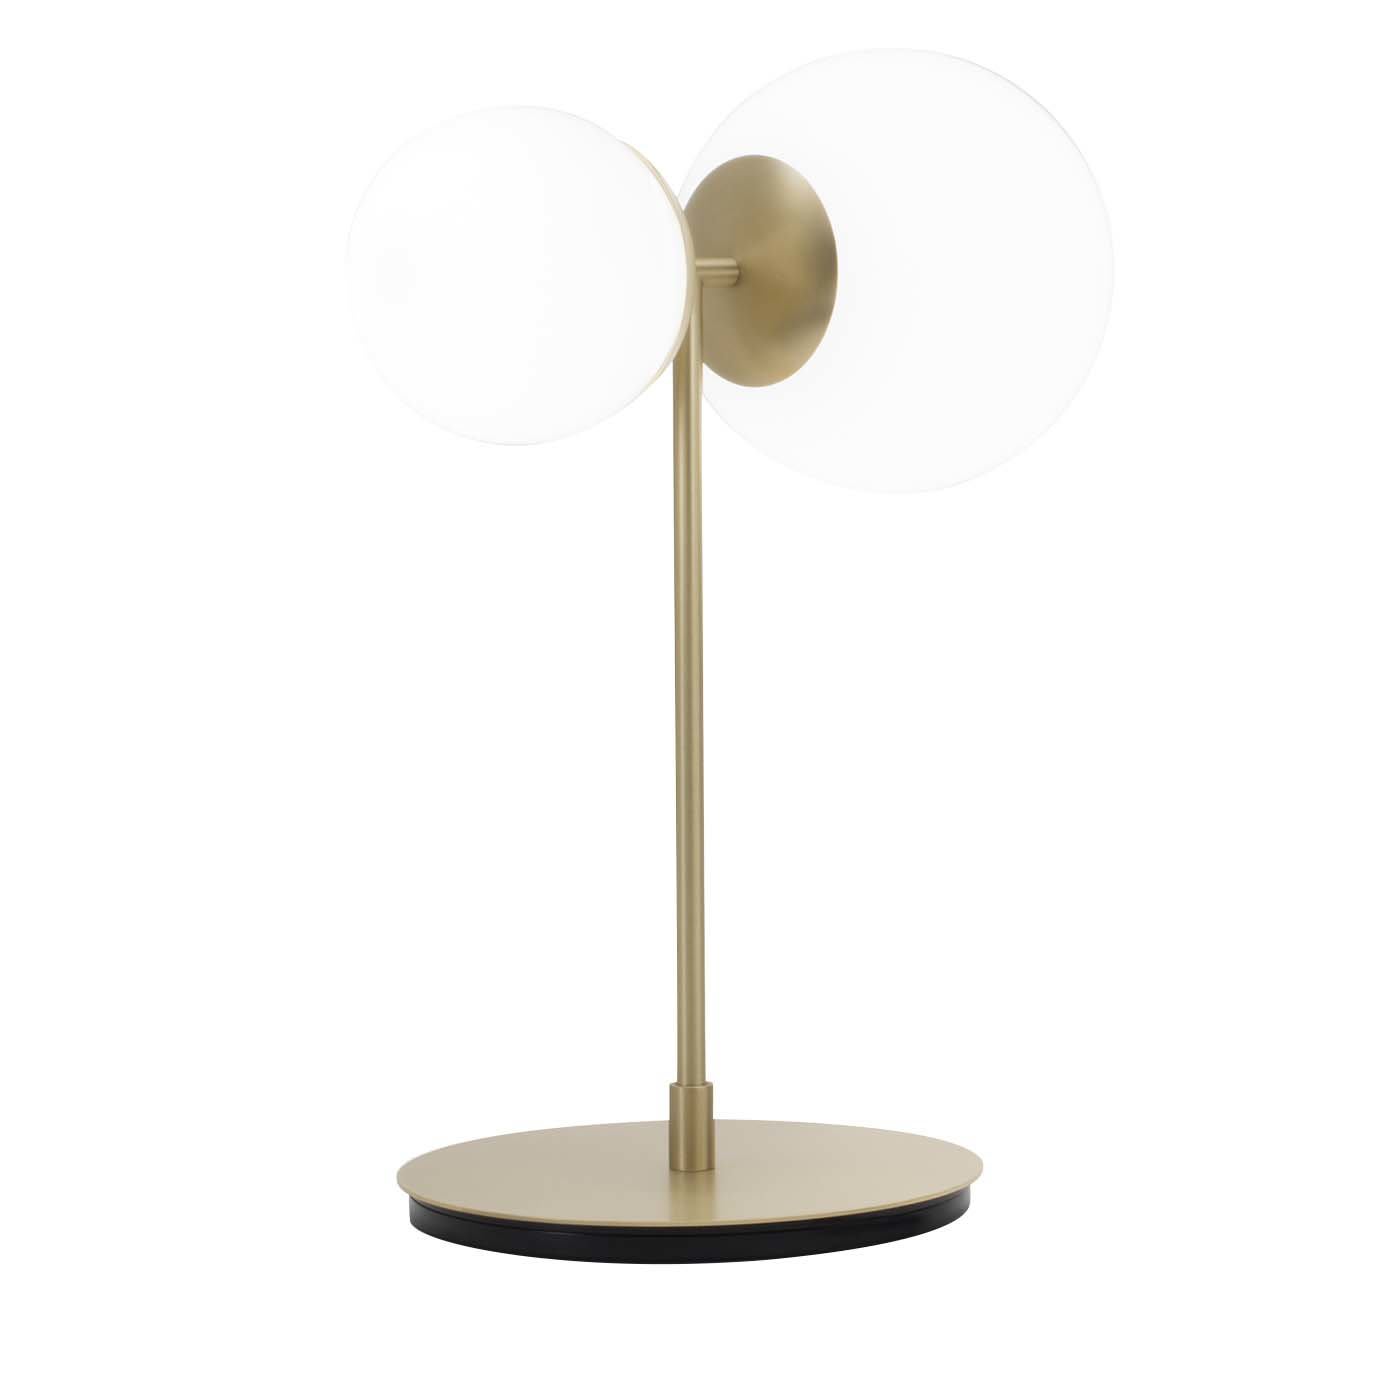 Biba Table Lamp by Lorenza Bozzoli - Tato